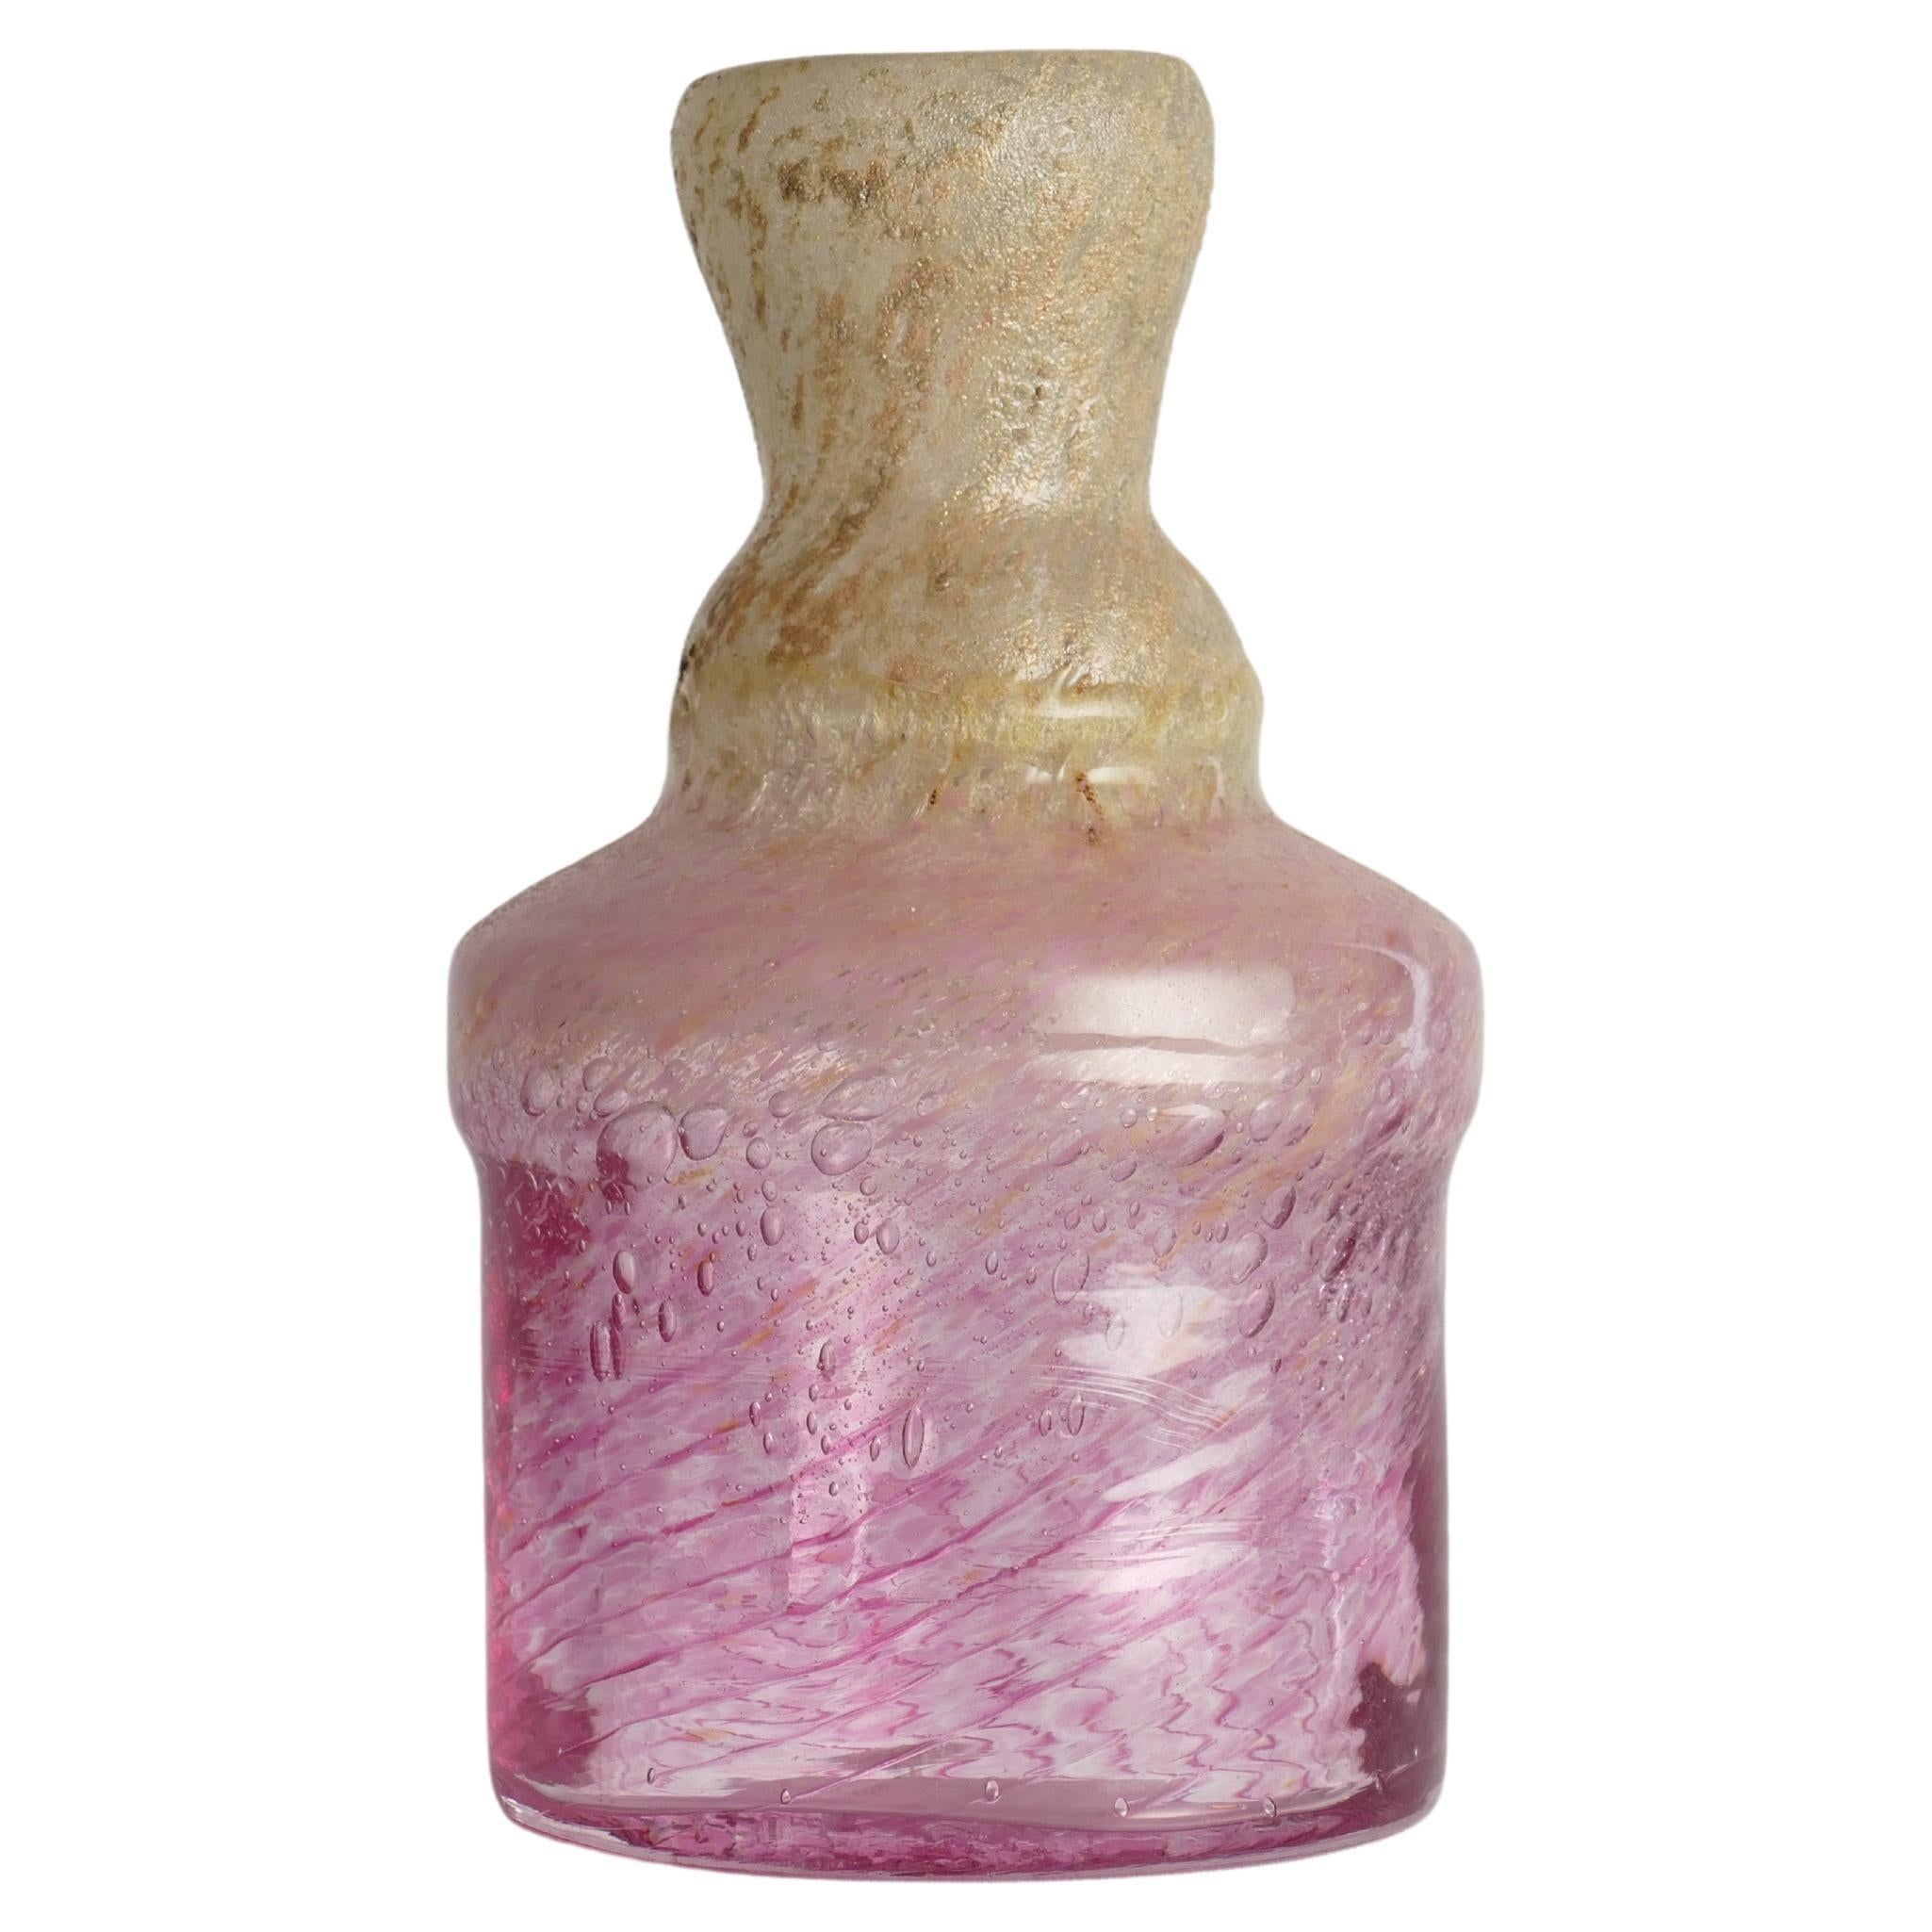 Unique Bubblegum Pink and Yellow Art Glass Vase by Milan Vobruba, Sweden 1980s For Sale